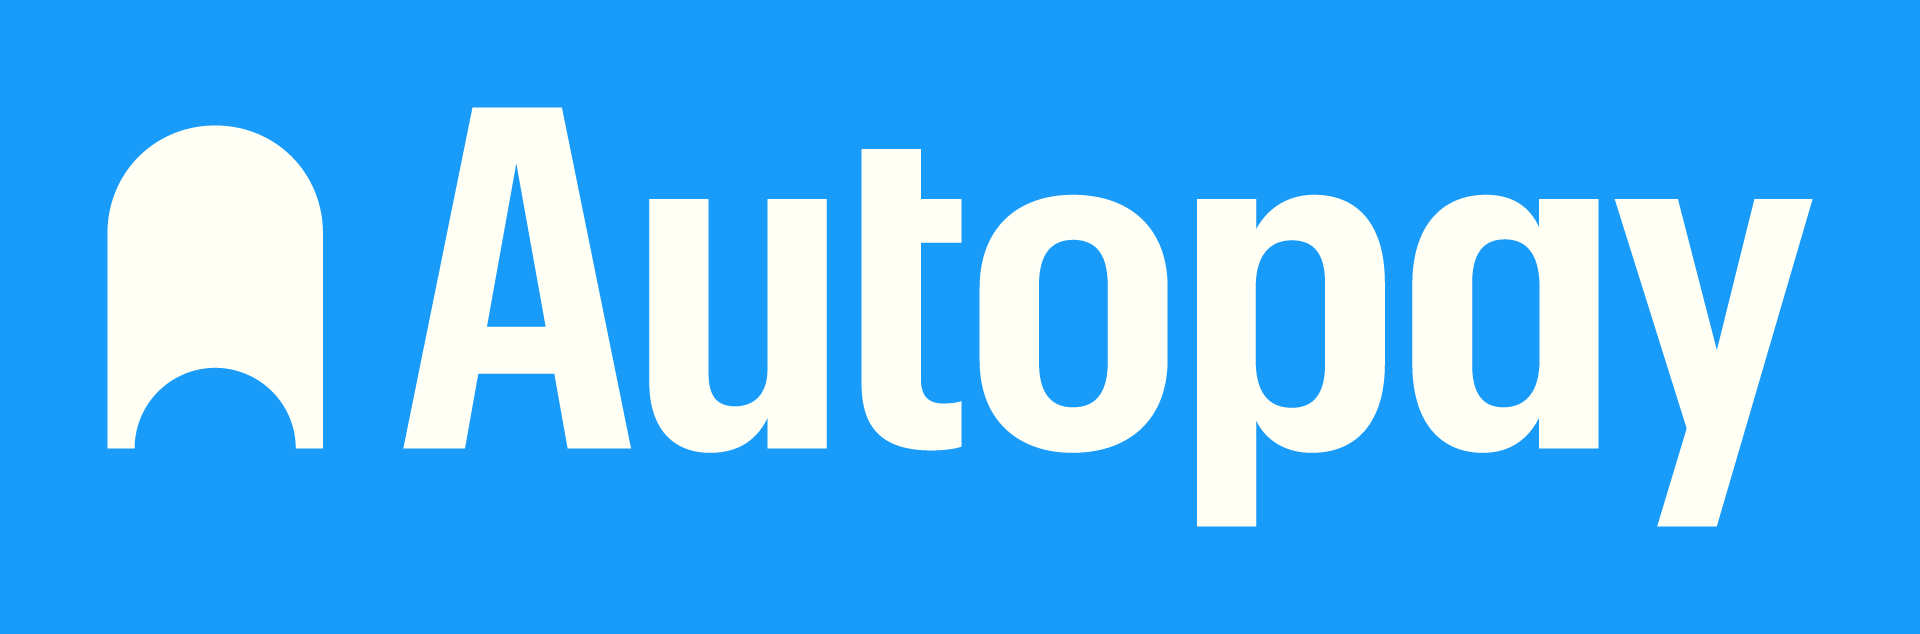 Autopay logo